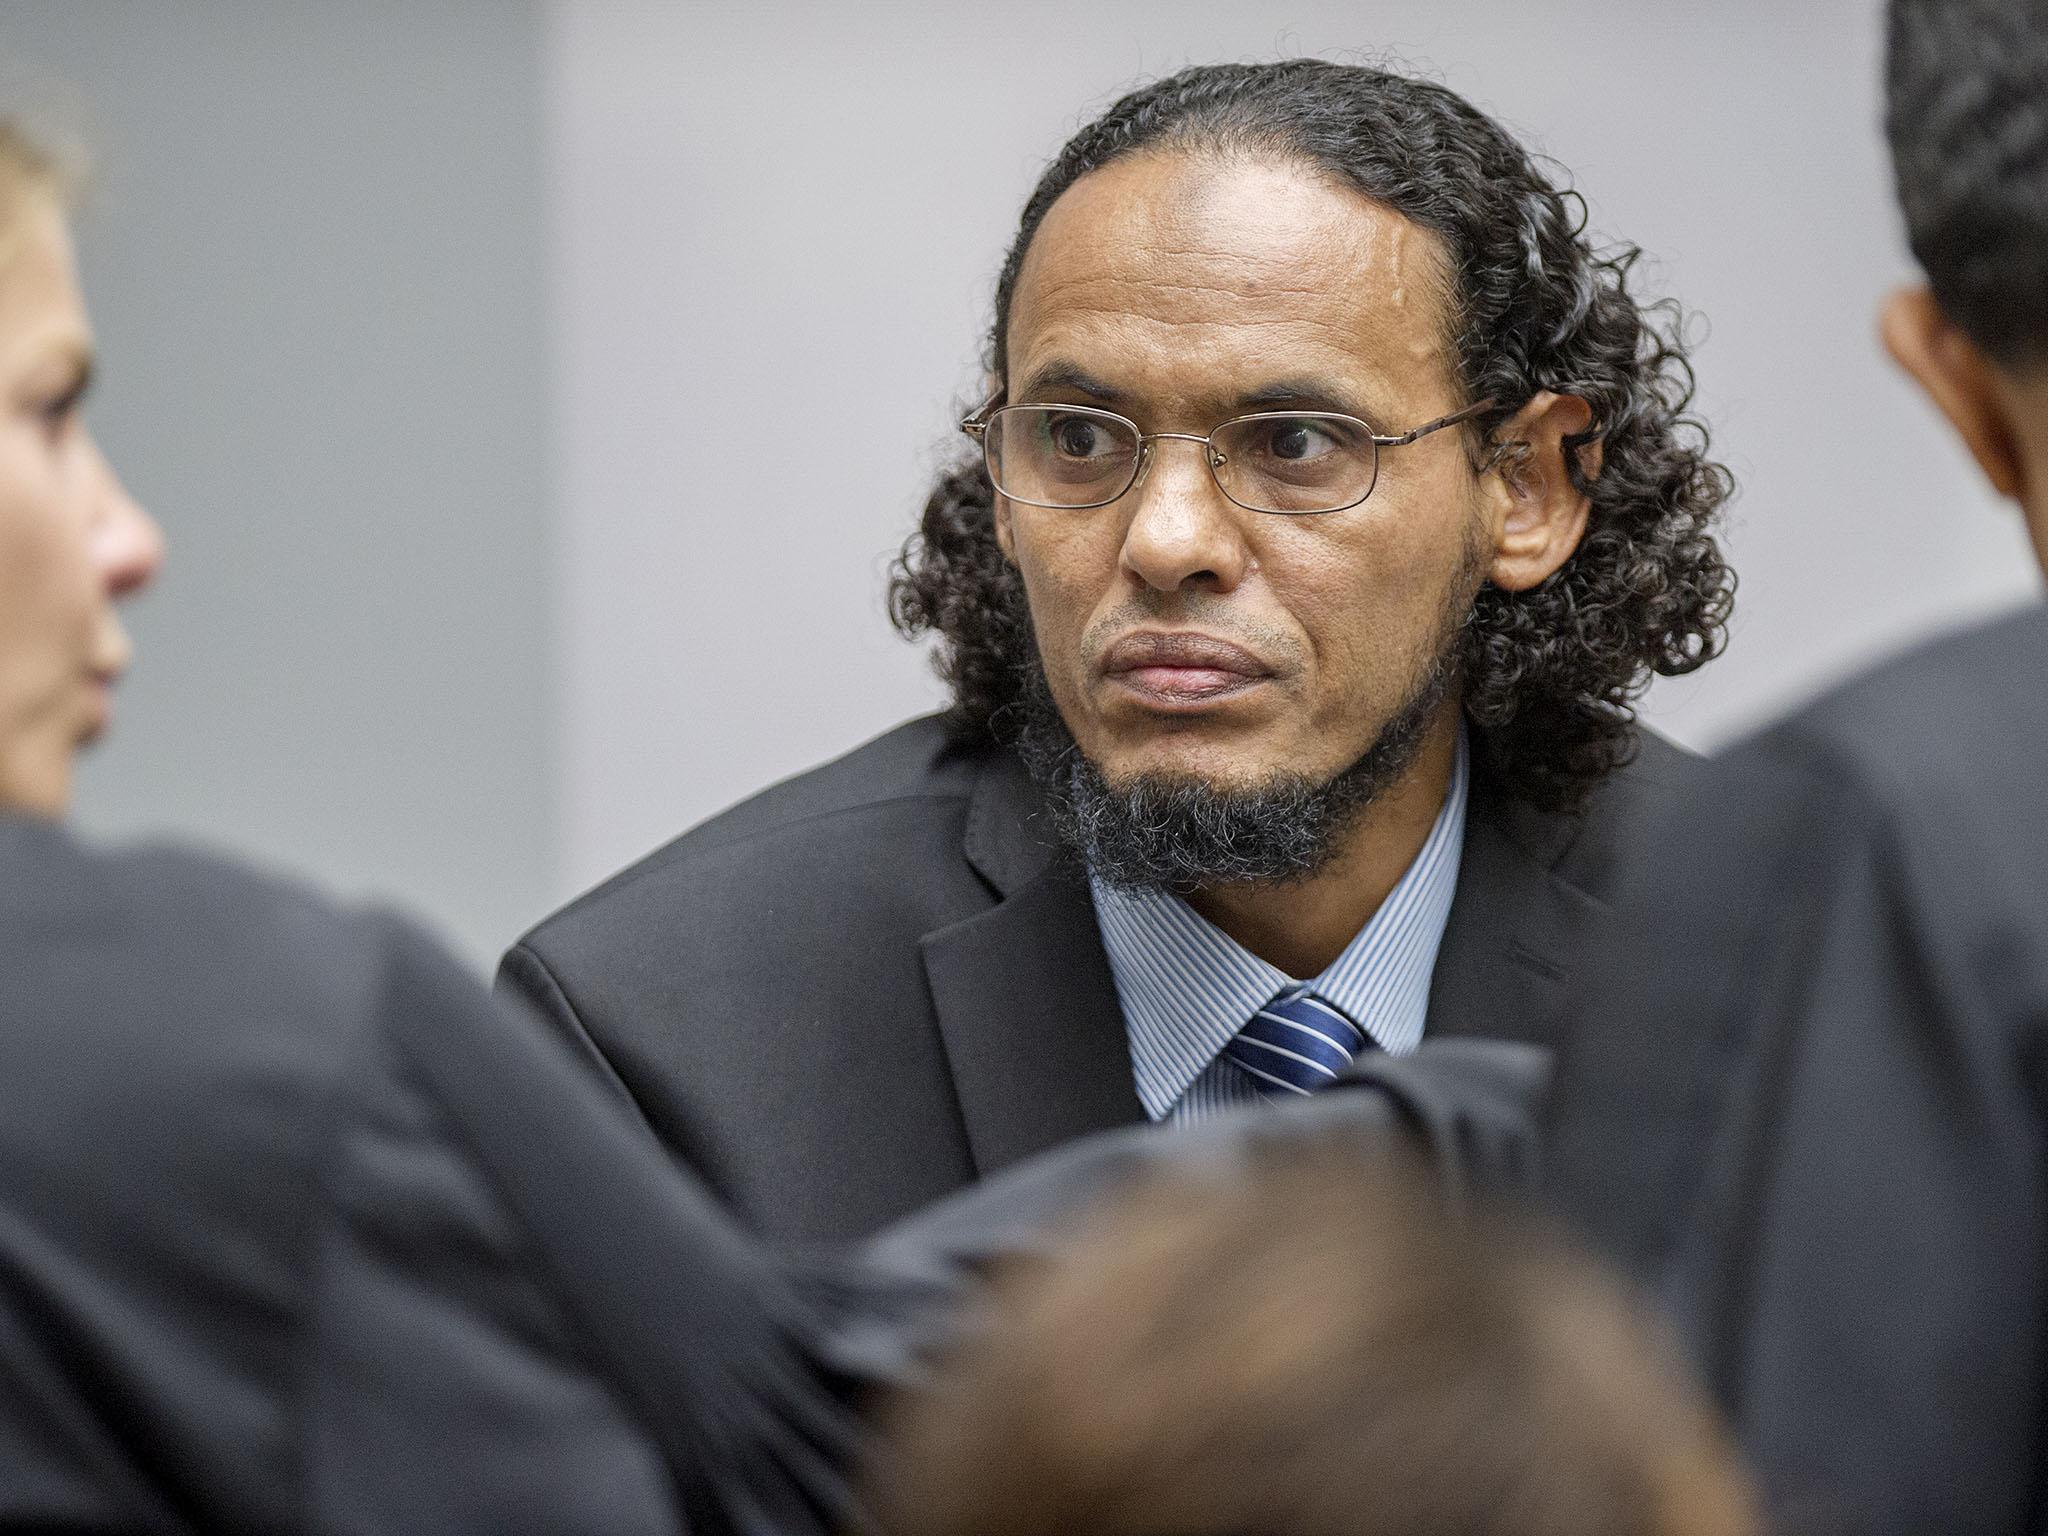 Ahmad Al Faqi Al Mahdi, center, appears at the International Criminal Court in The Hague, Netherlands